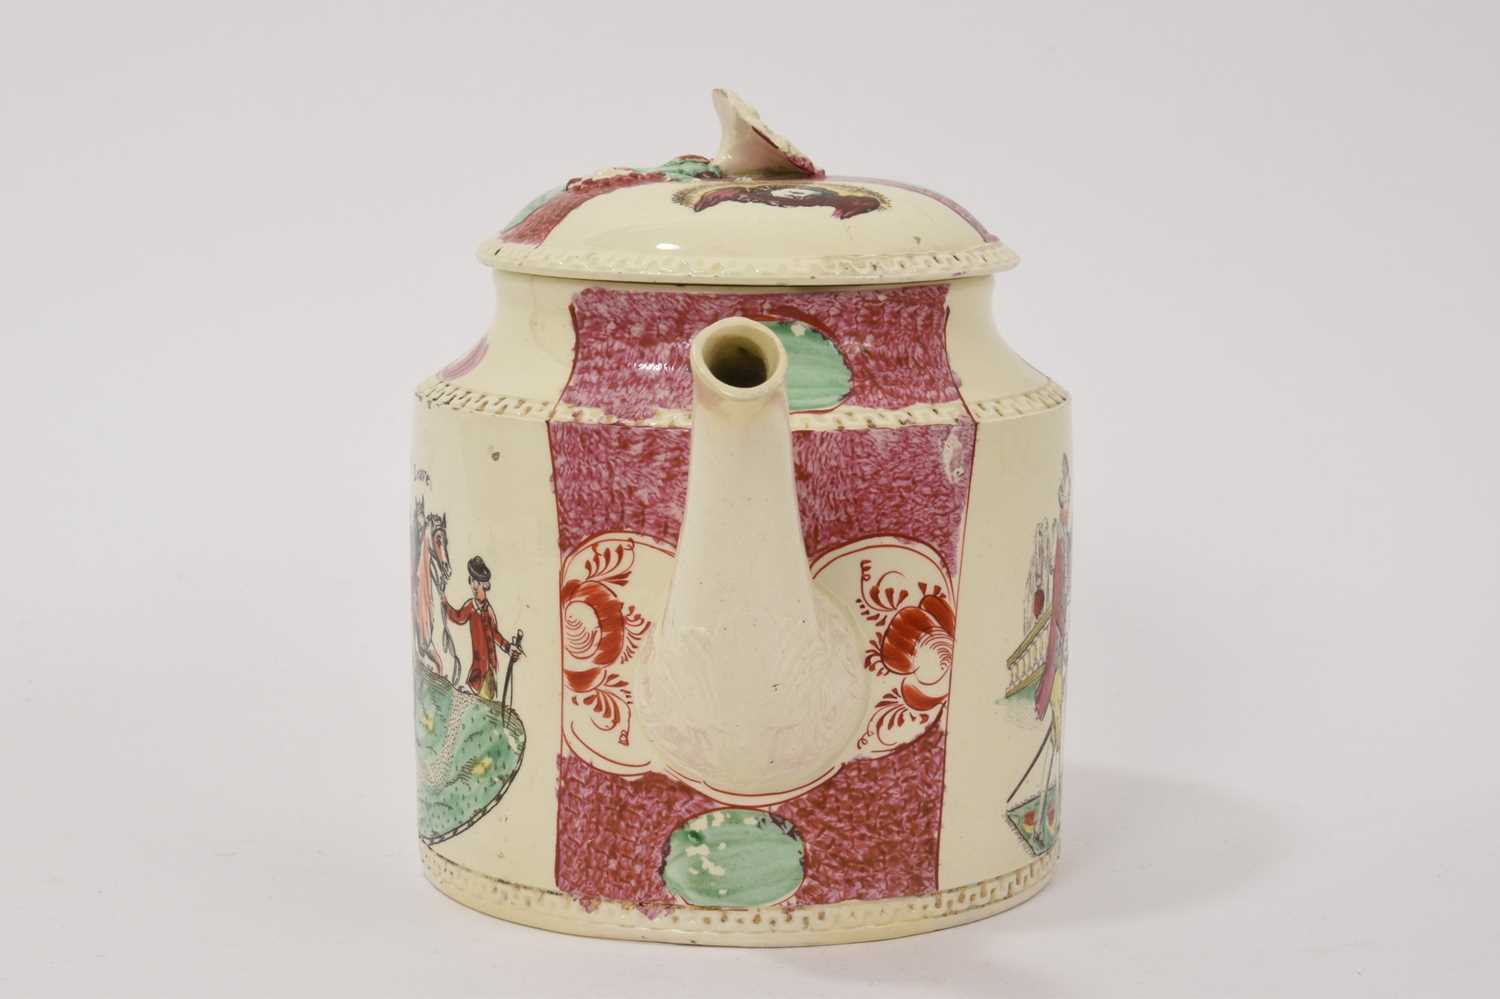 18th century creamware teapot by William Greatbatch - The prodigal son taking leave - Bild 2 aus 8